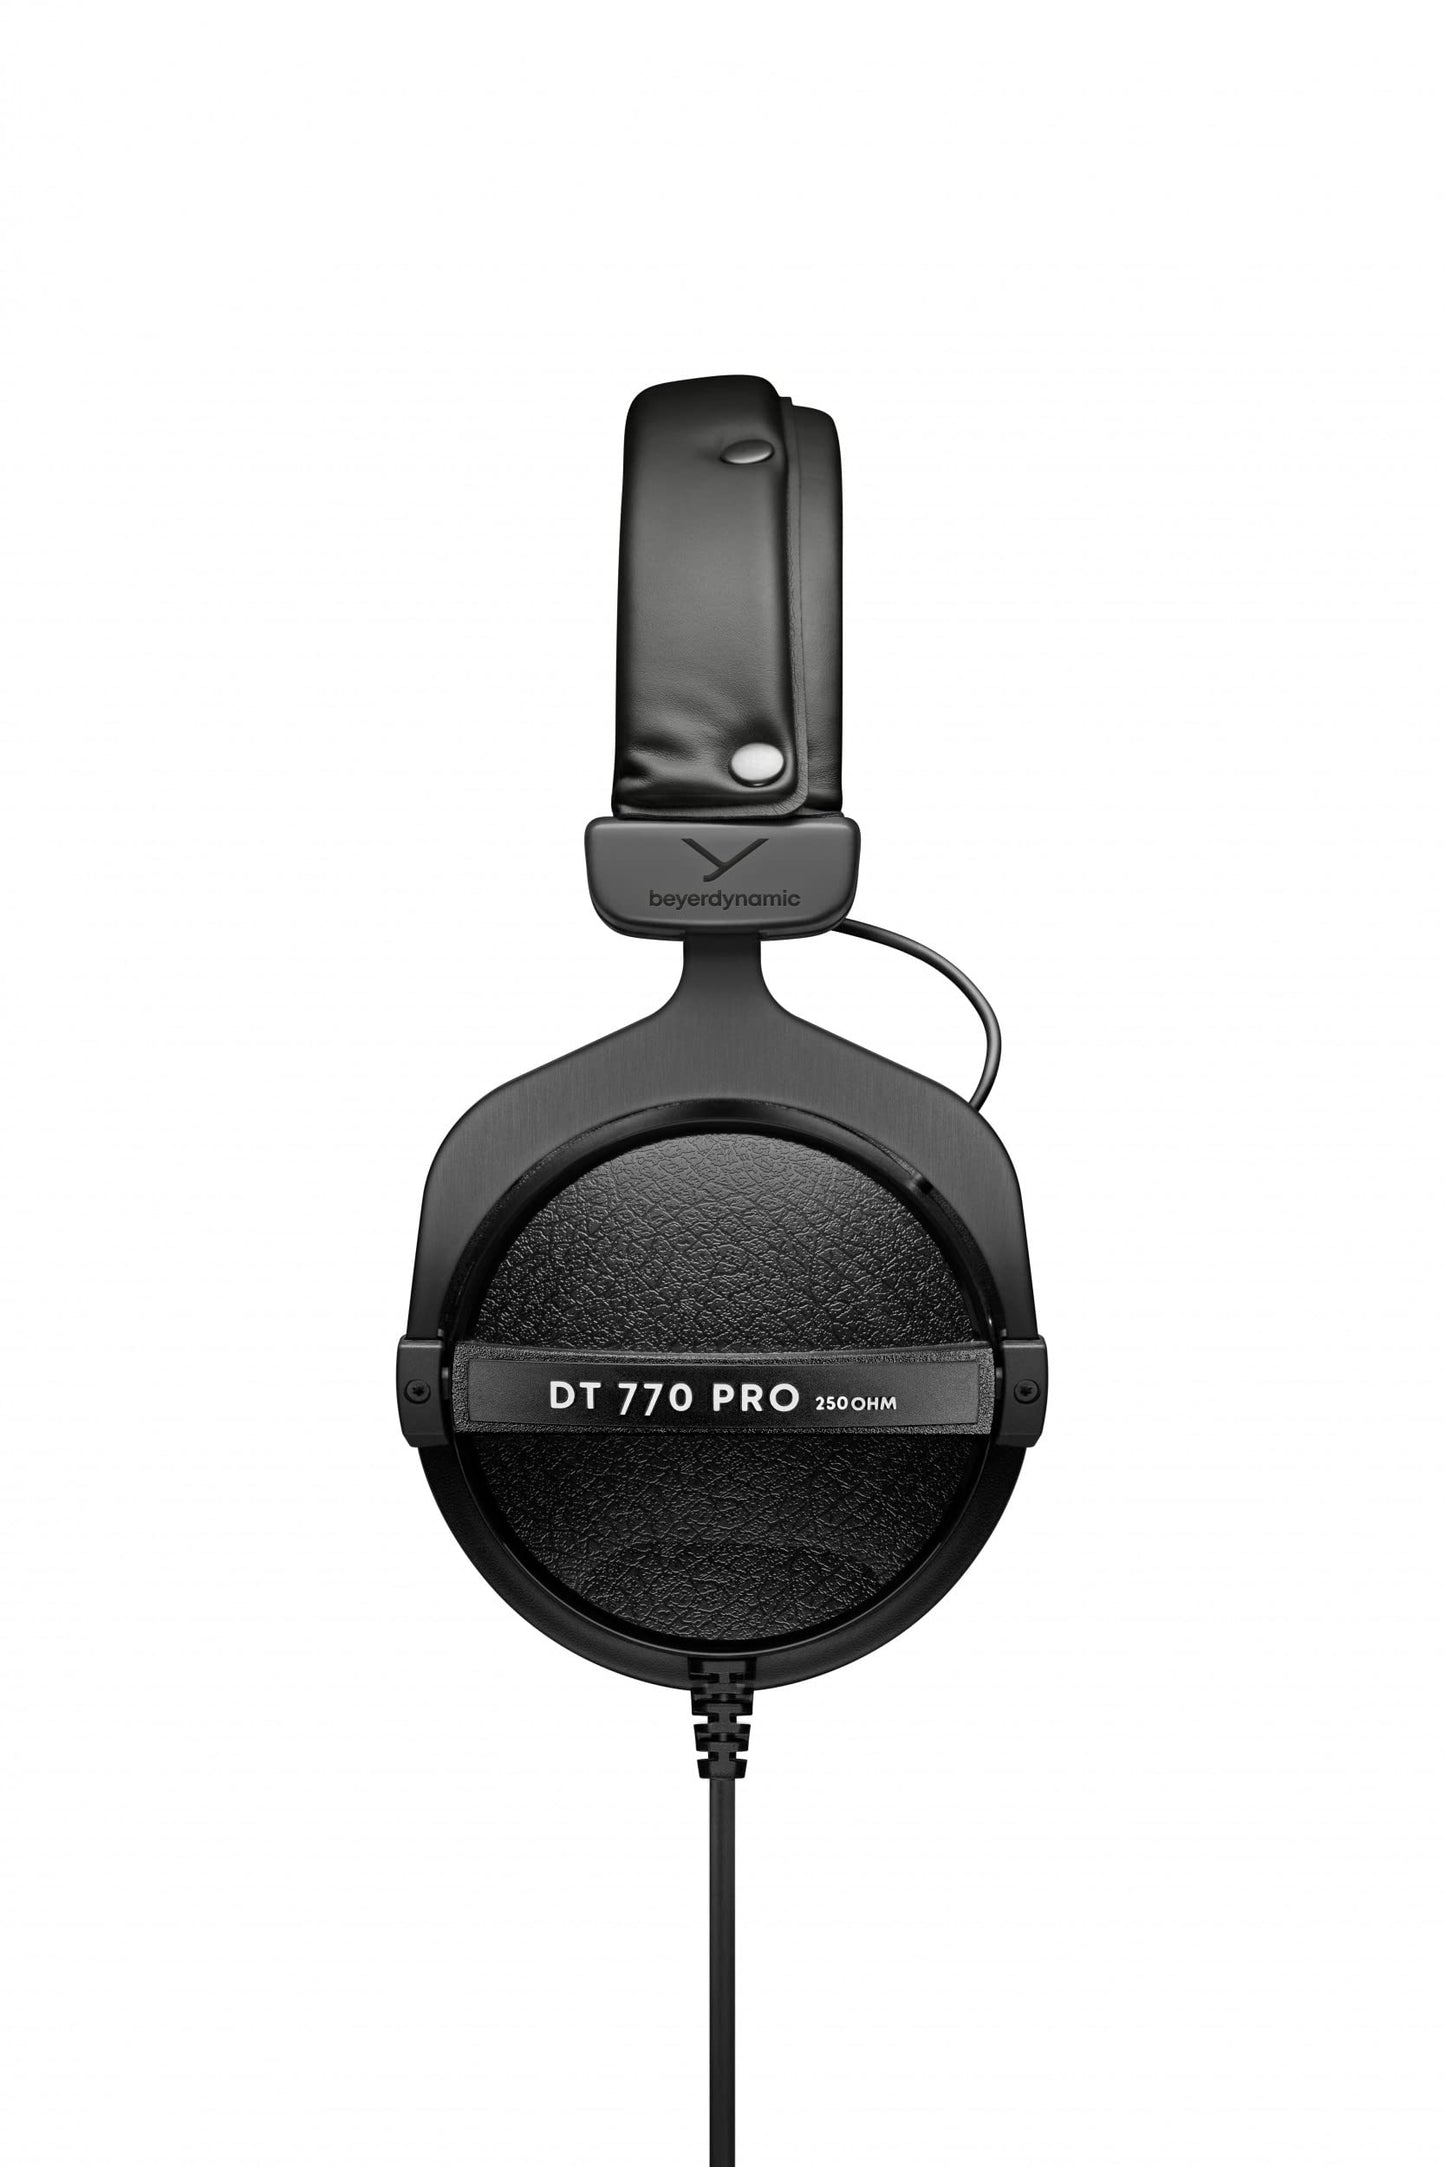 beyerdynamic DT 770 PRO 250 Ohm Over-Ear Studio Headphones - Black